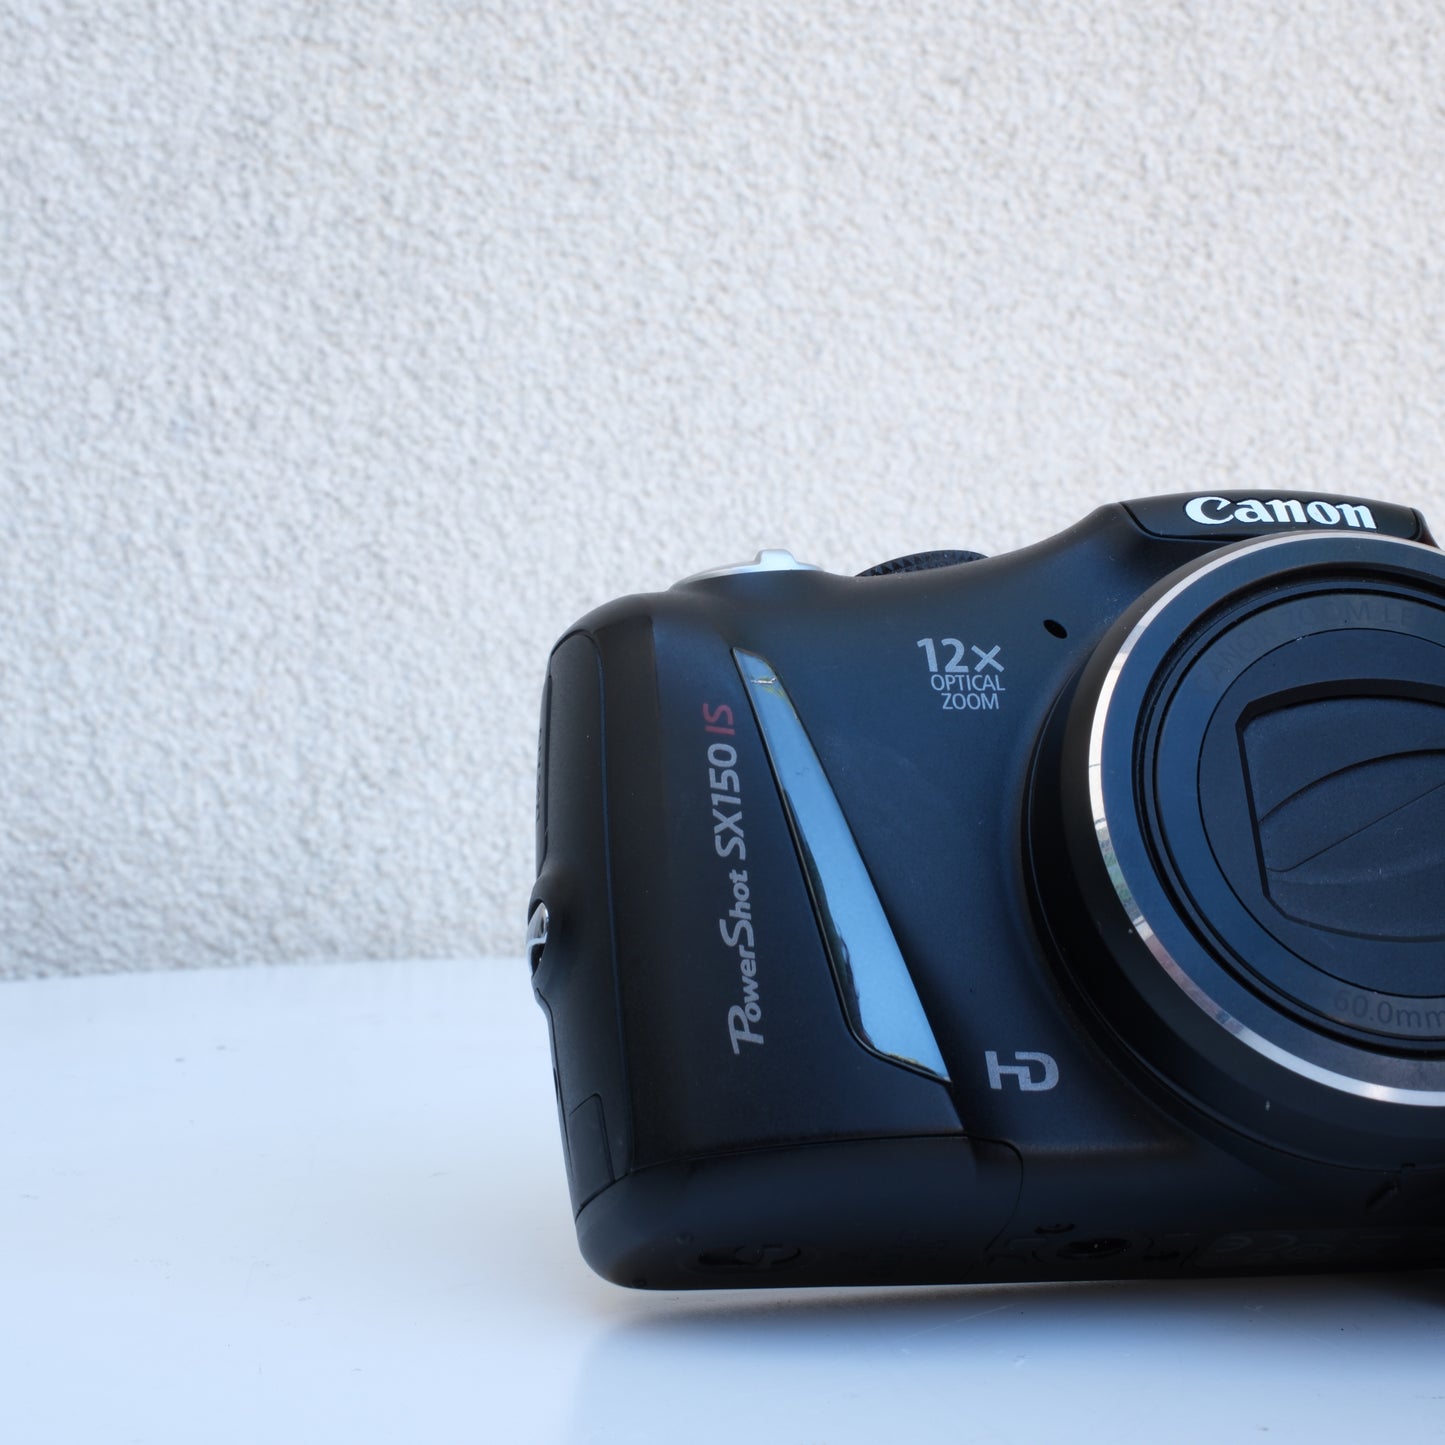 Canon Powershot SX150 IS